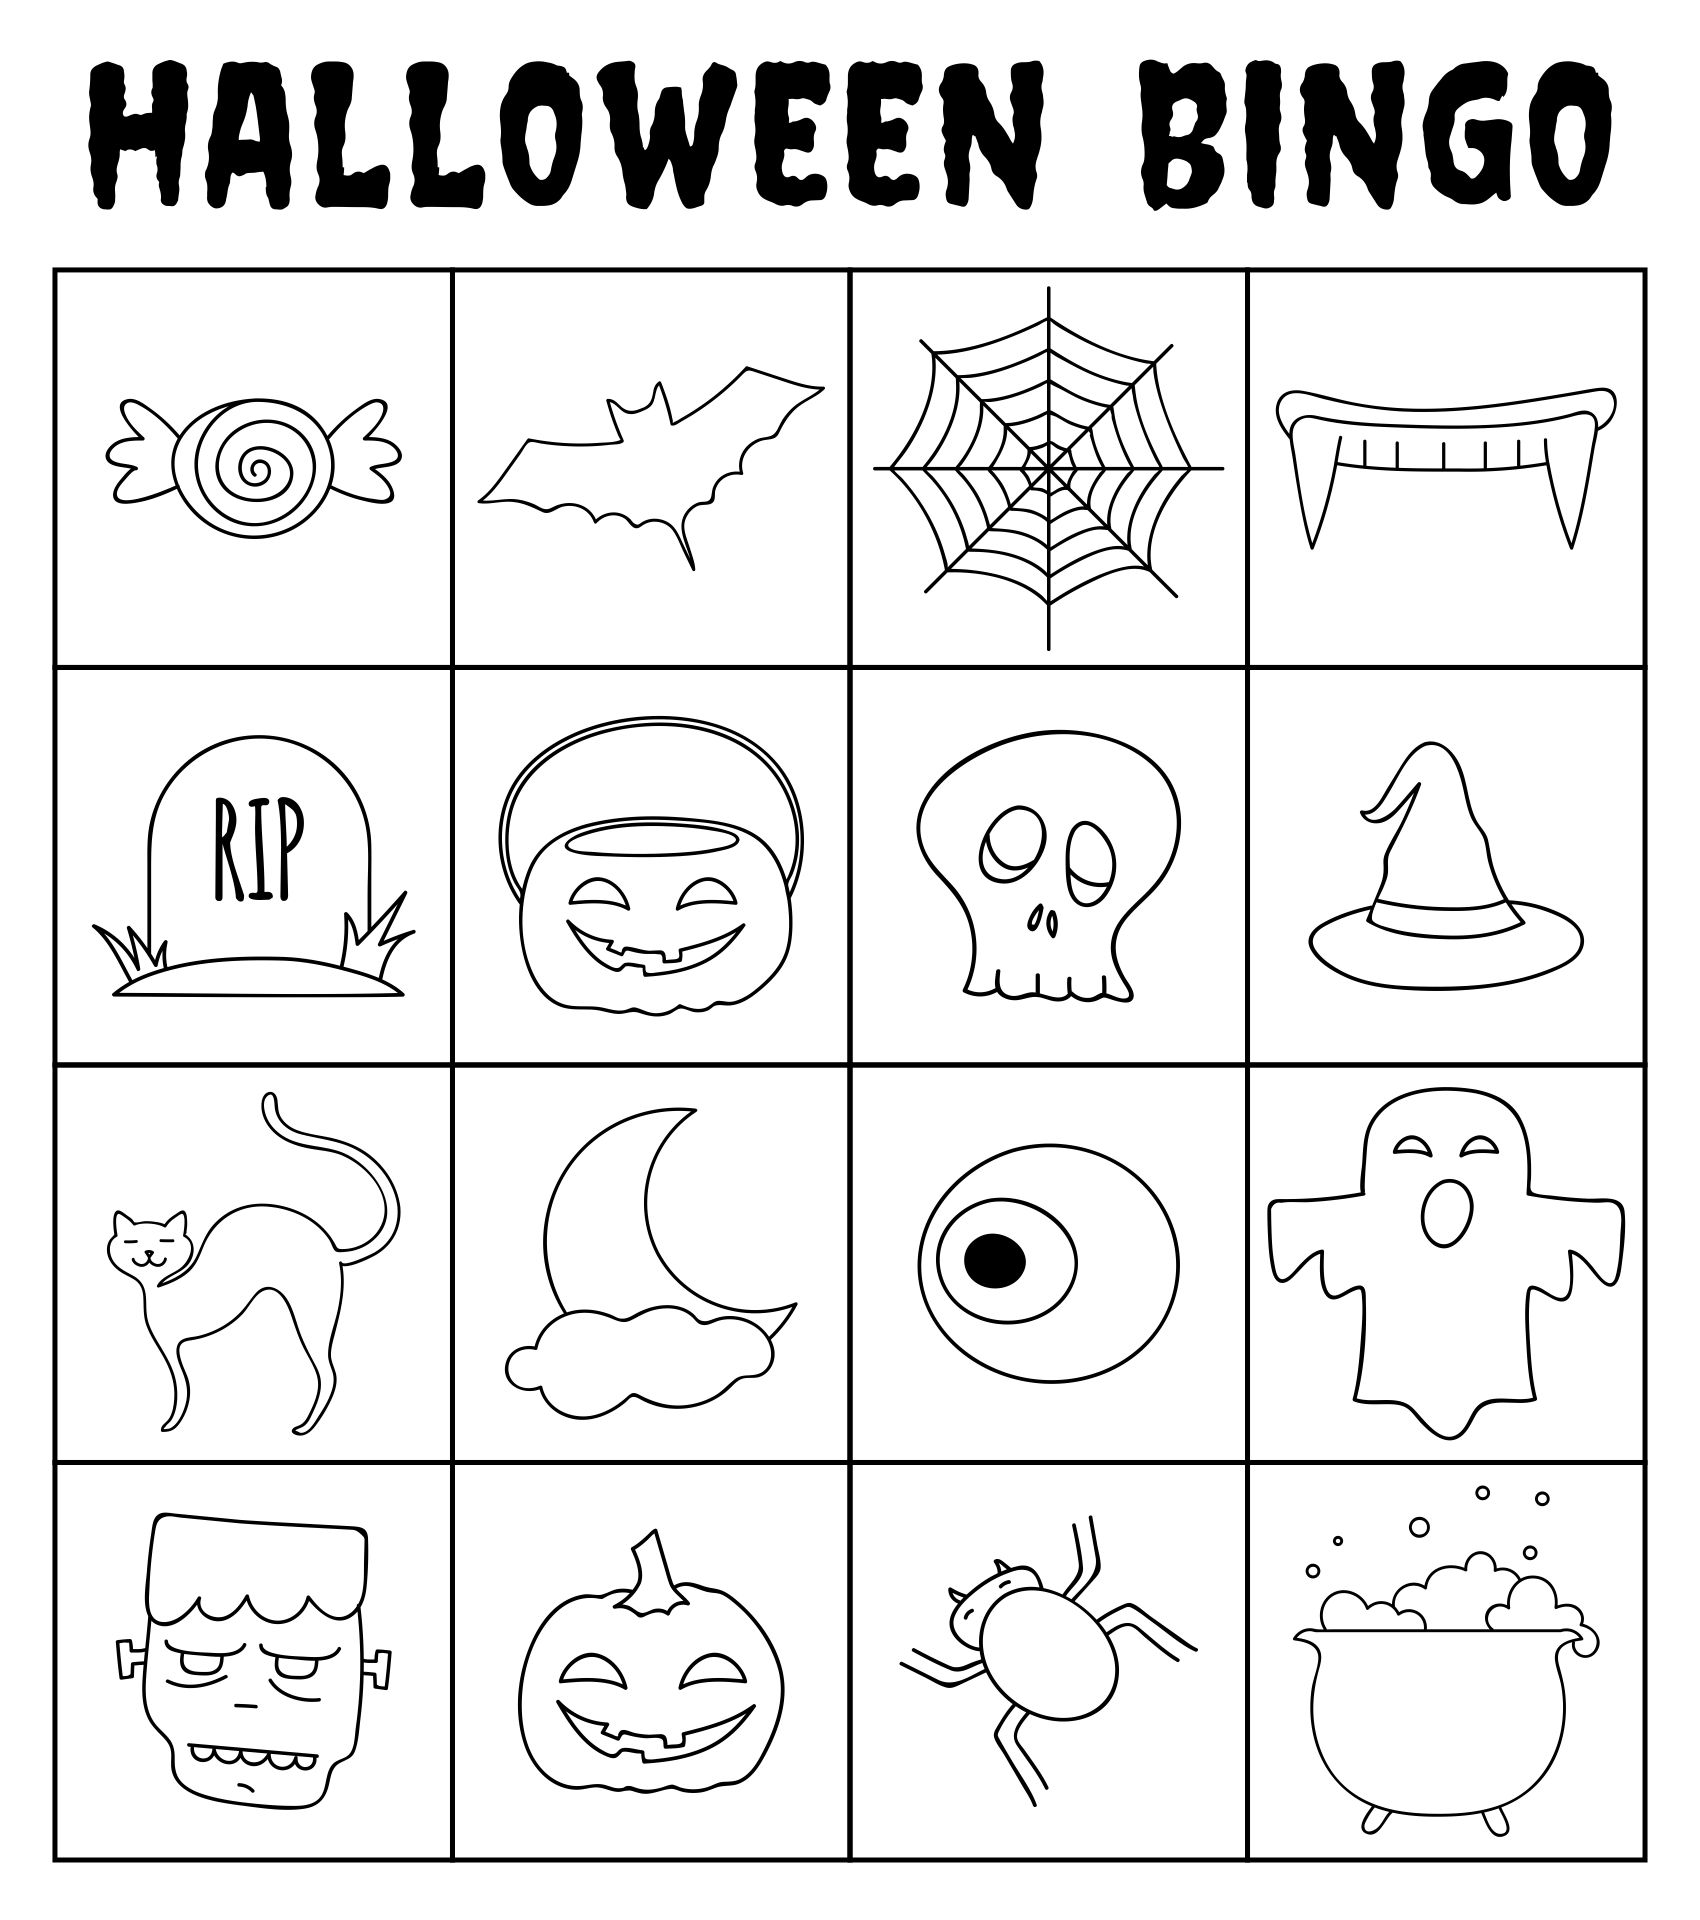 White Halloween Bingo Coloring Page Printable